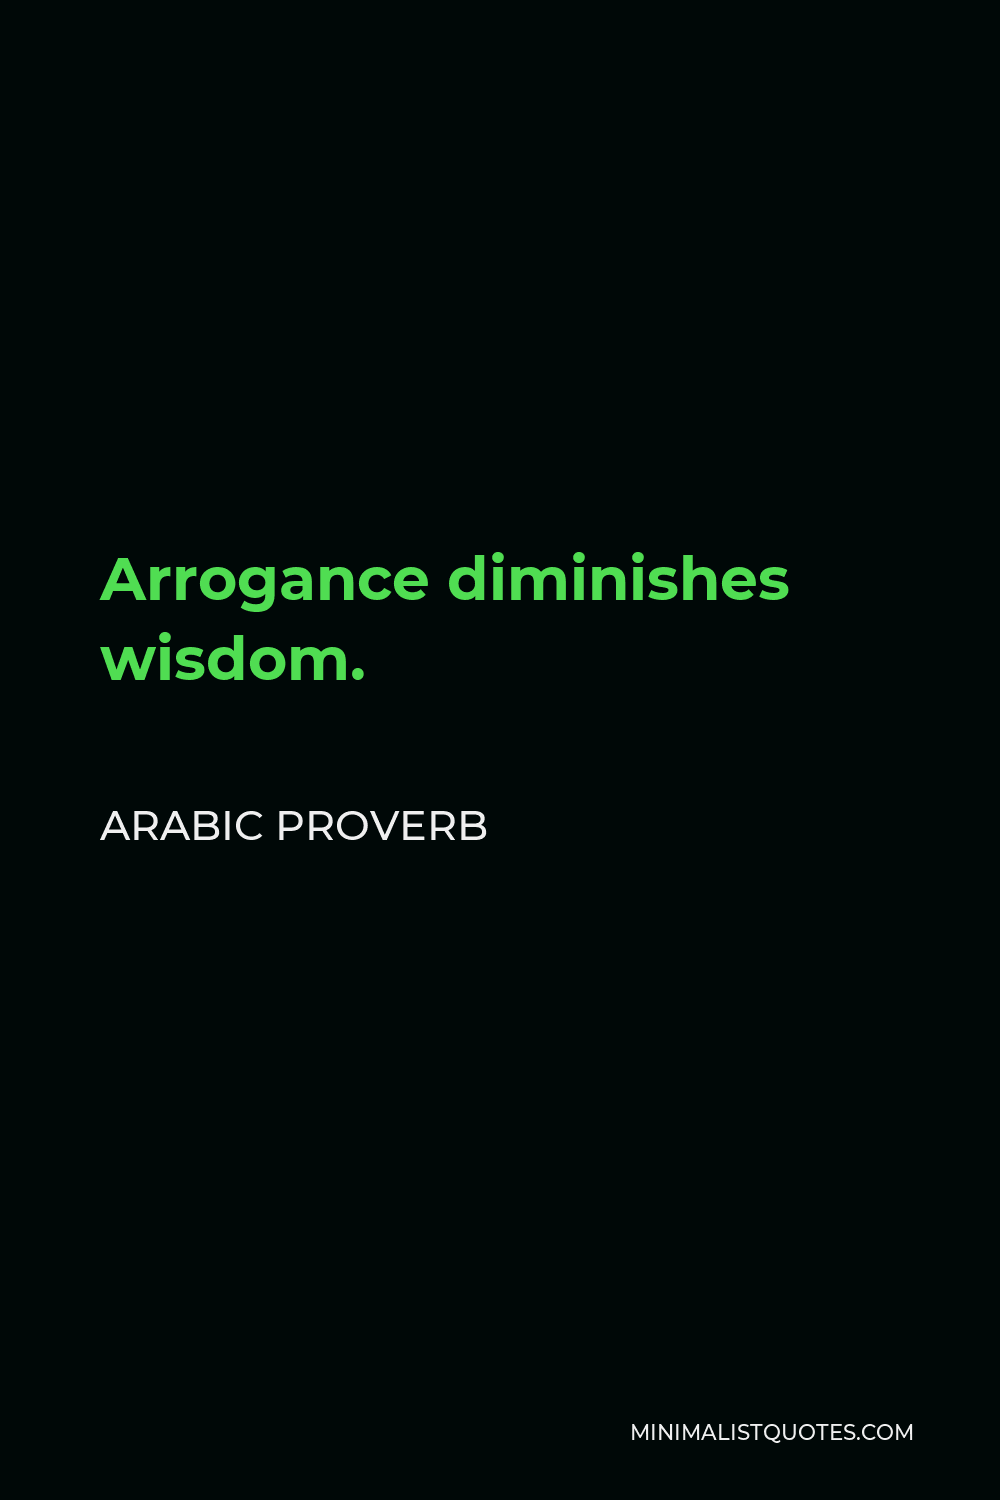 Arabic Proverb Quote - Arrogance diminishes wisdom.